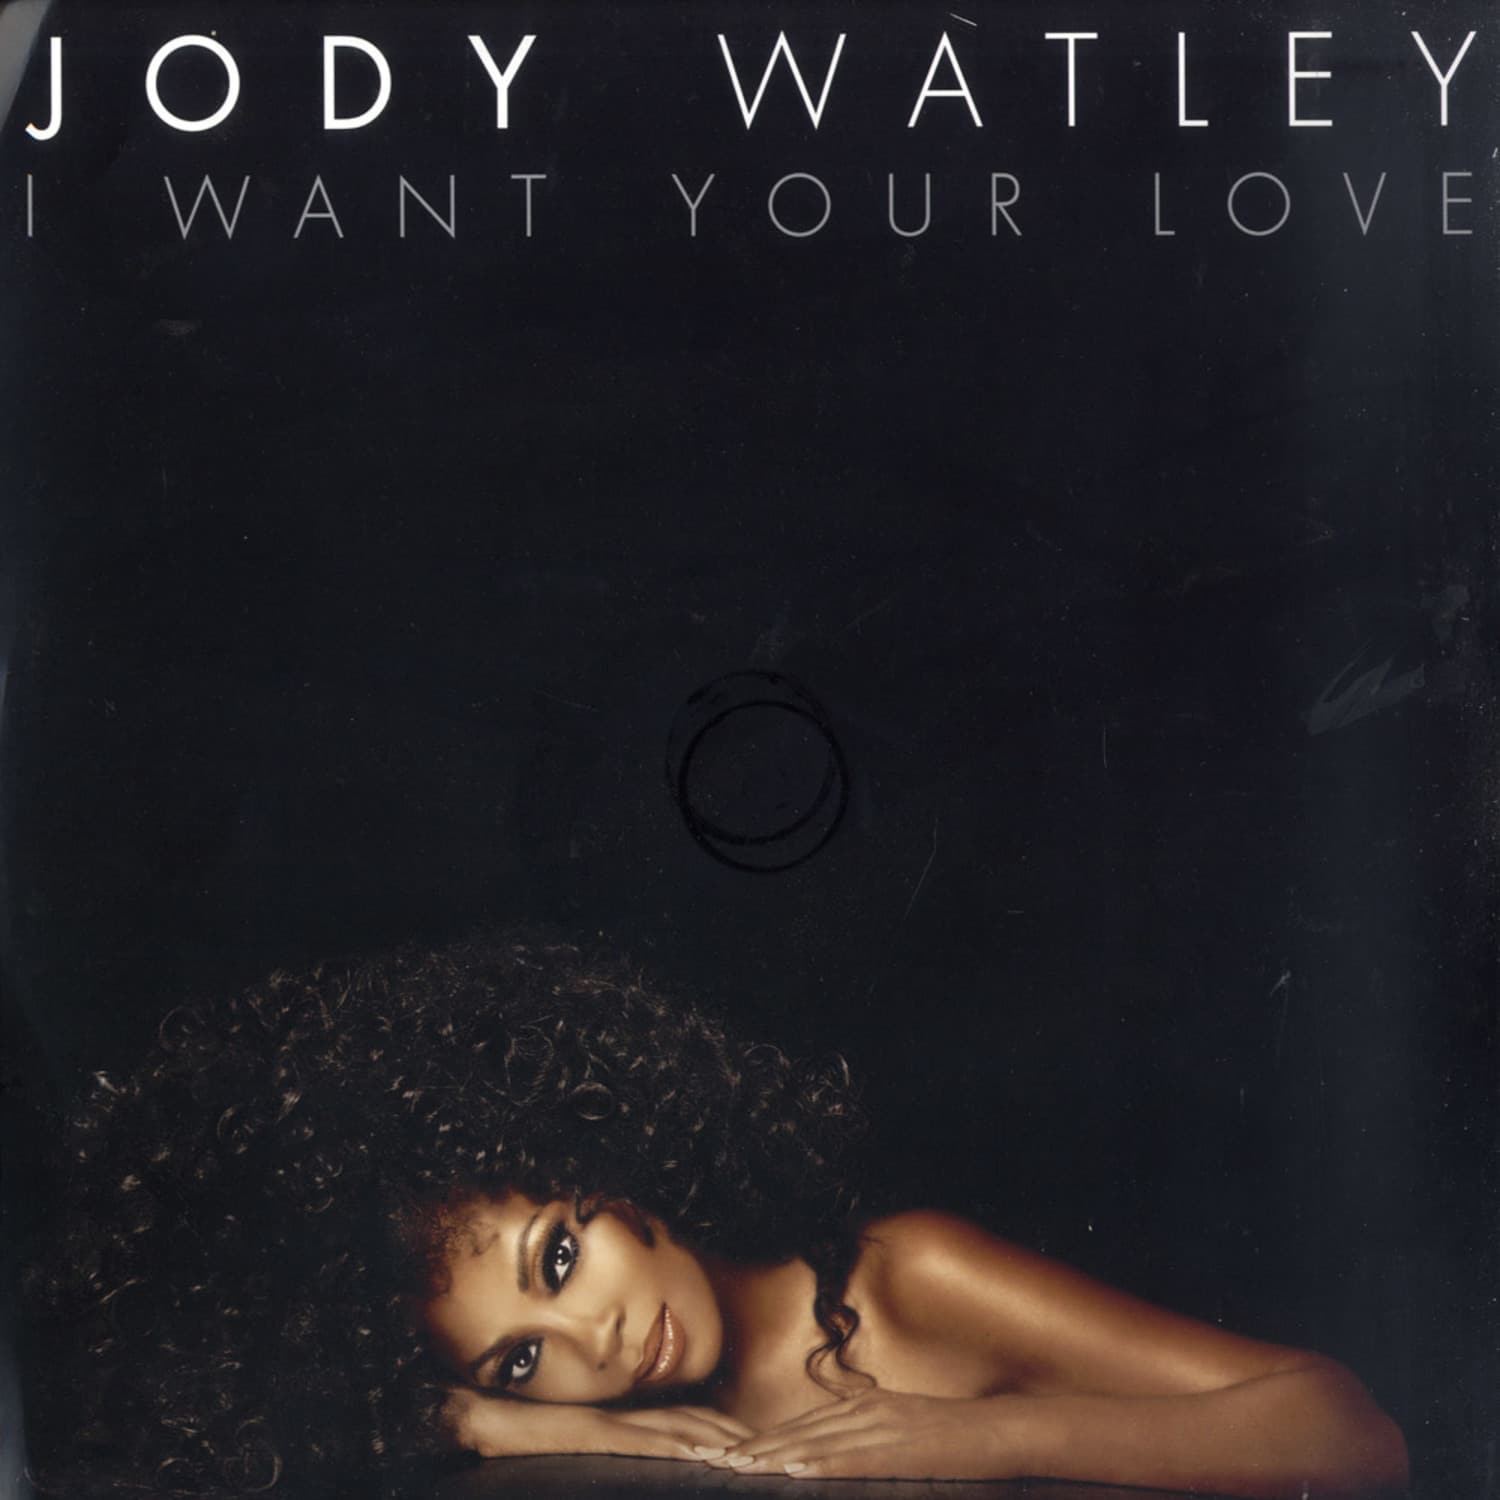 Jody Watley - I WANT YOUR LOVE